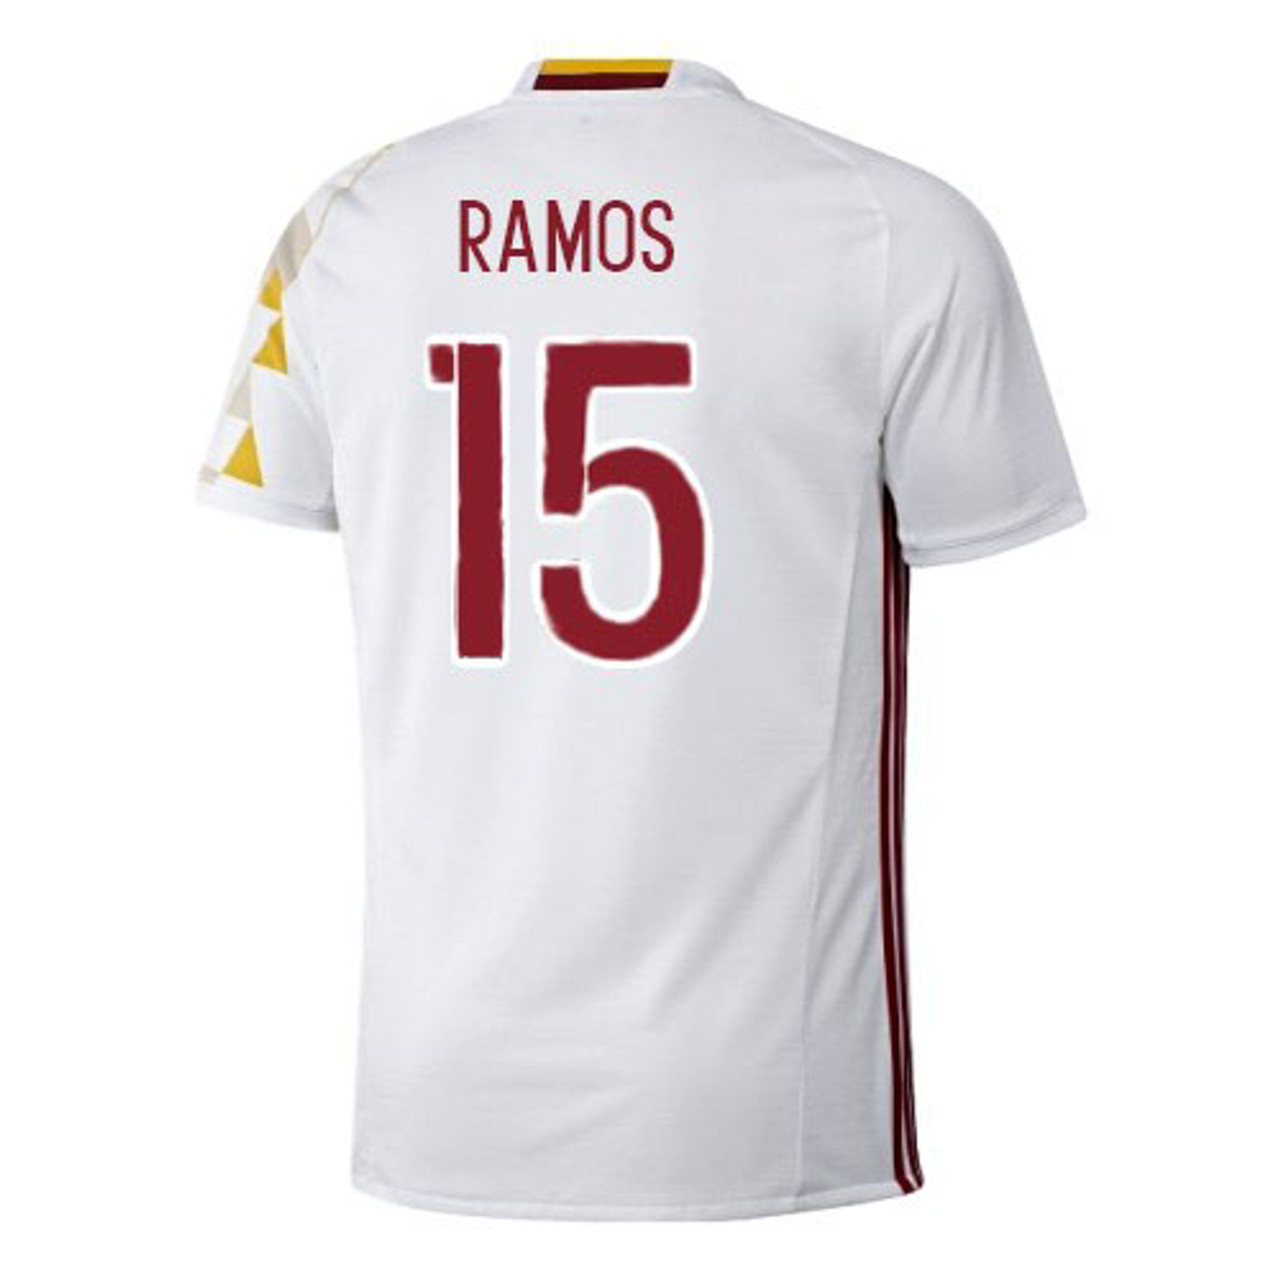 ADIDAS SPAIN 2016 RAMOS AWAY JERSEY - Soccer Plus